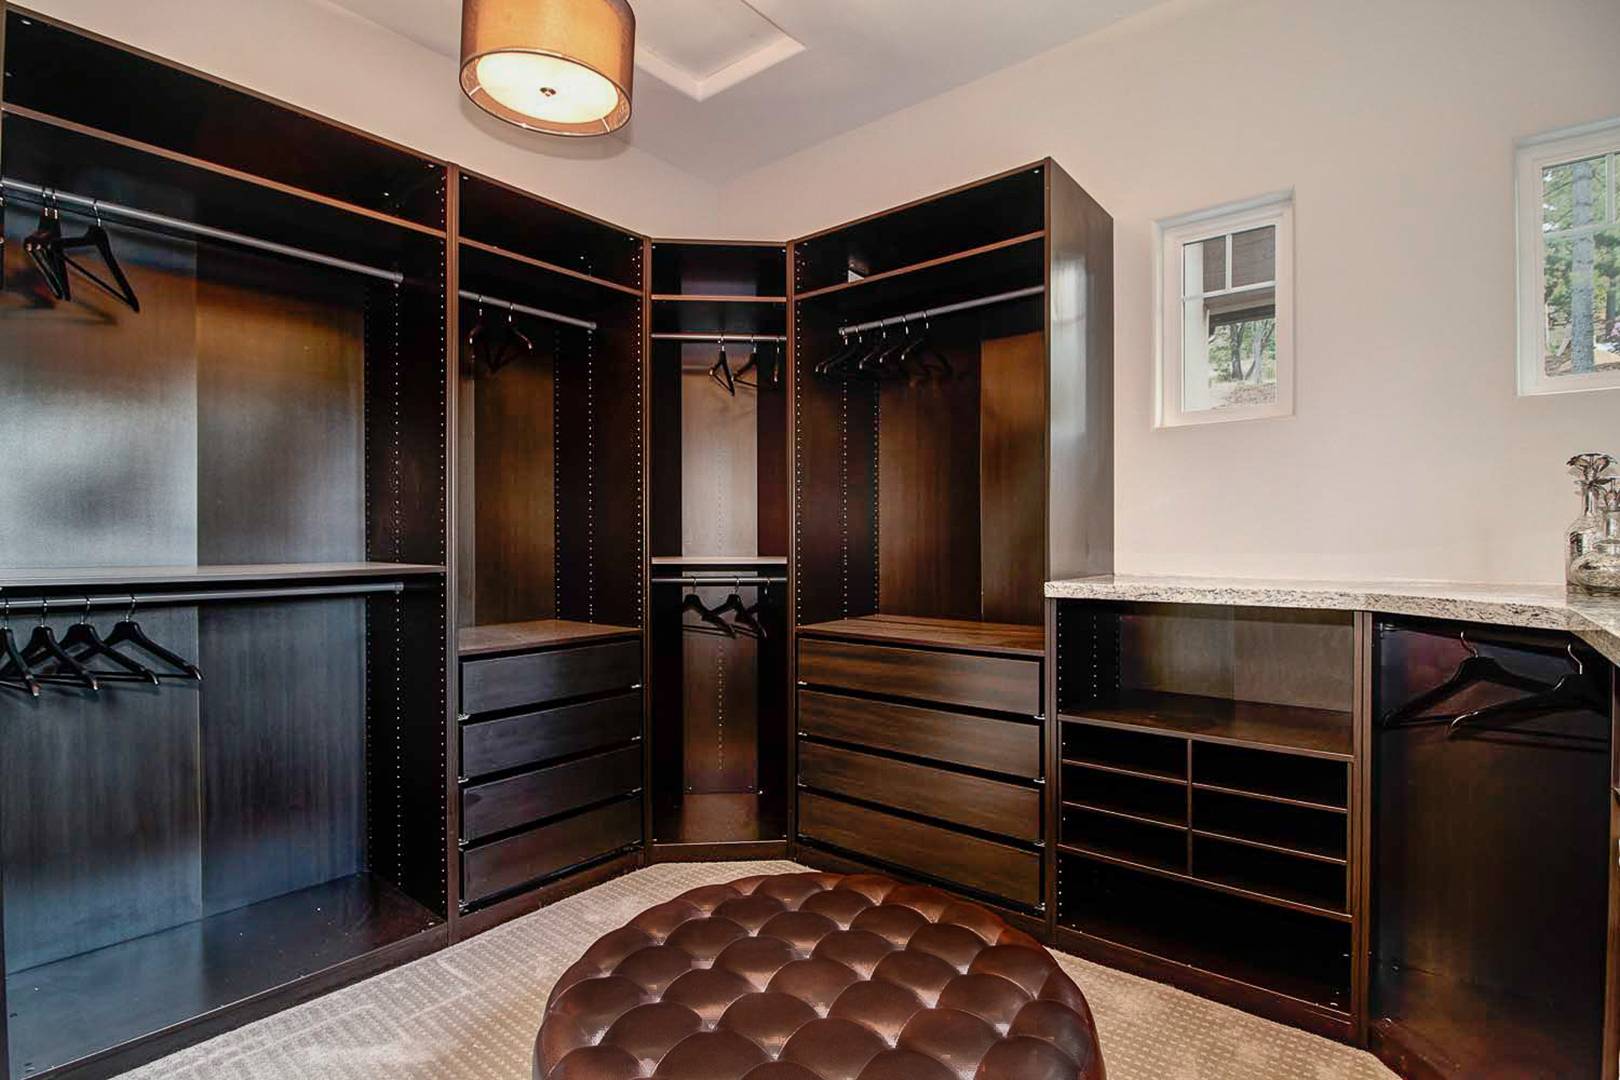 Walk-in closet with custom drawers and racks